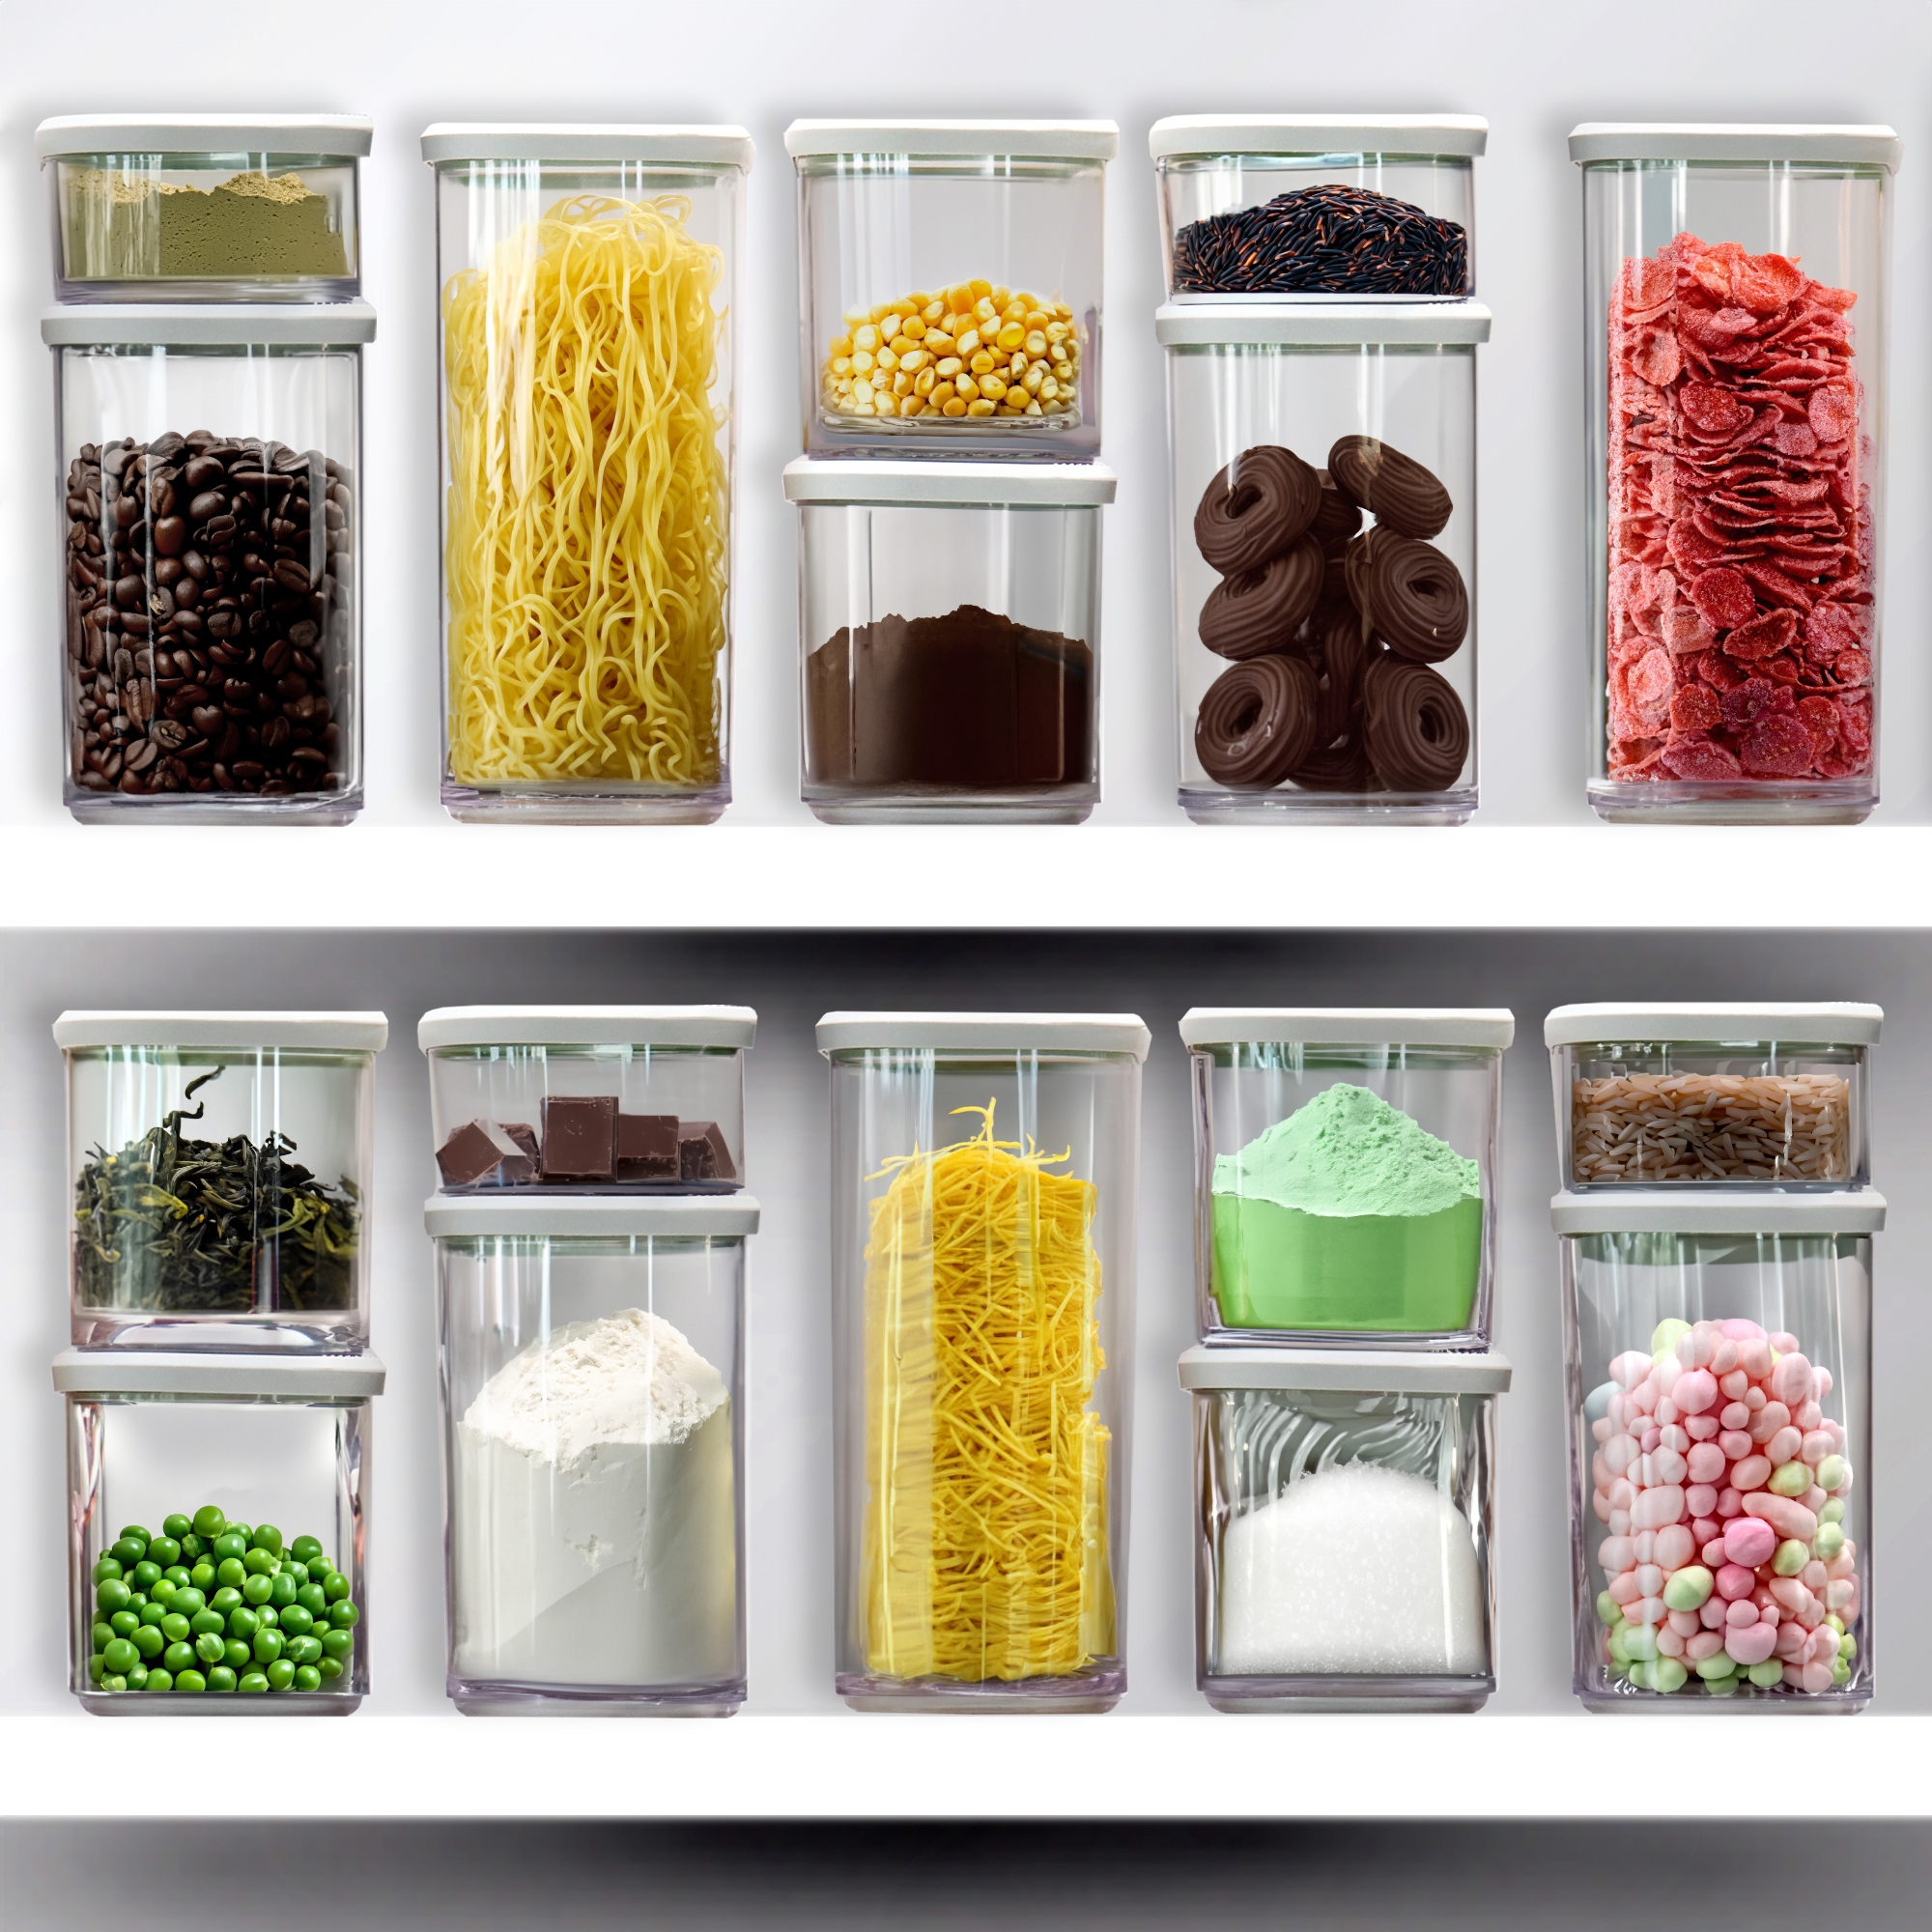 Culinaris - 3 x Storage Container Set  - Set of 15